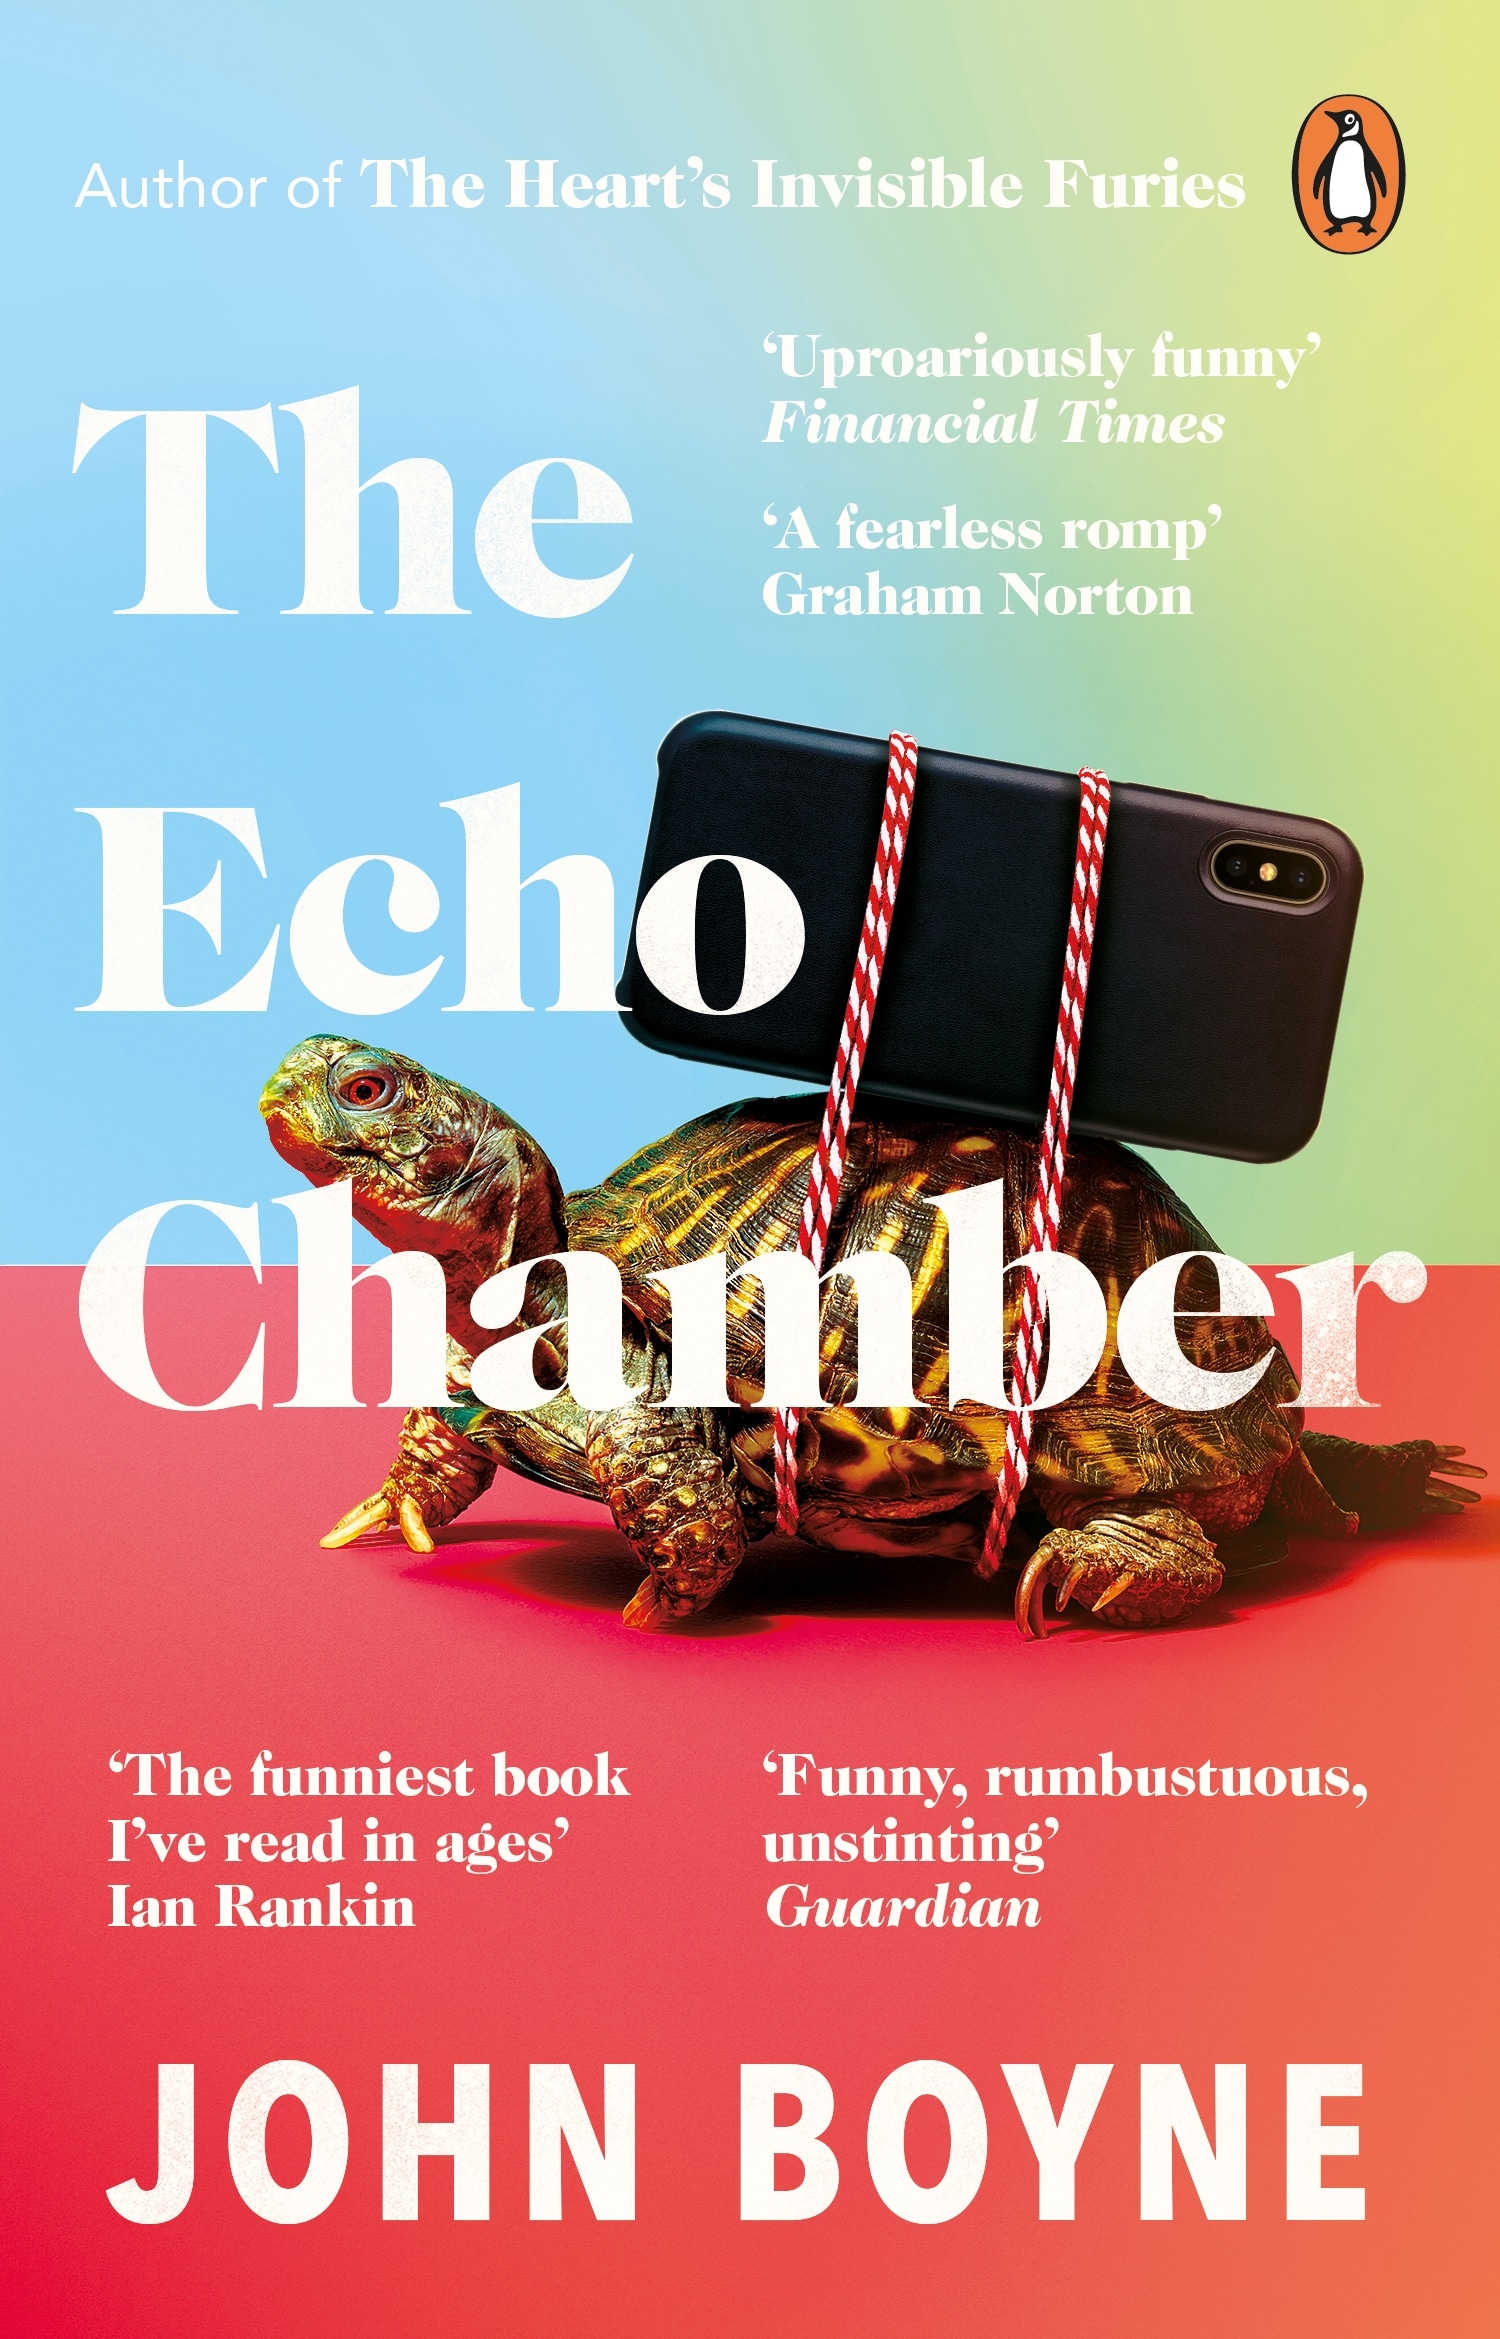 Book “The Echo Chamber” by John Boyne — April 14, 2022